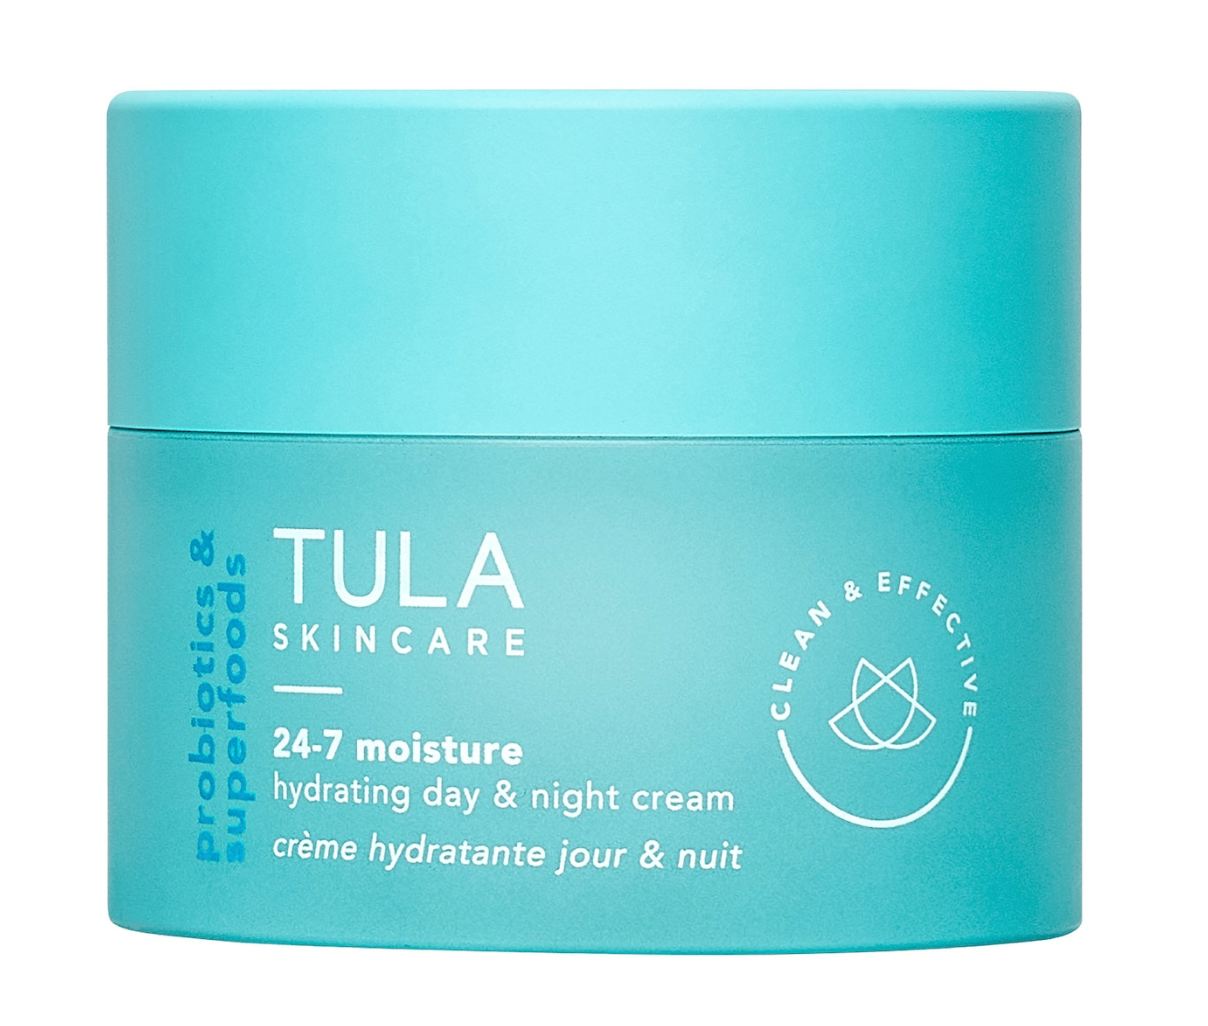 TULA Skincare 24-7 Moisture Hydrating Day & Night Cream